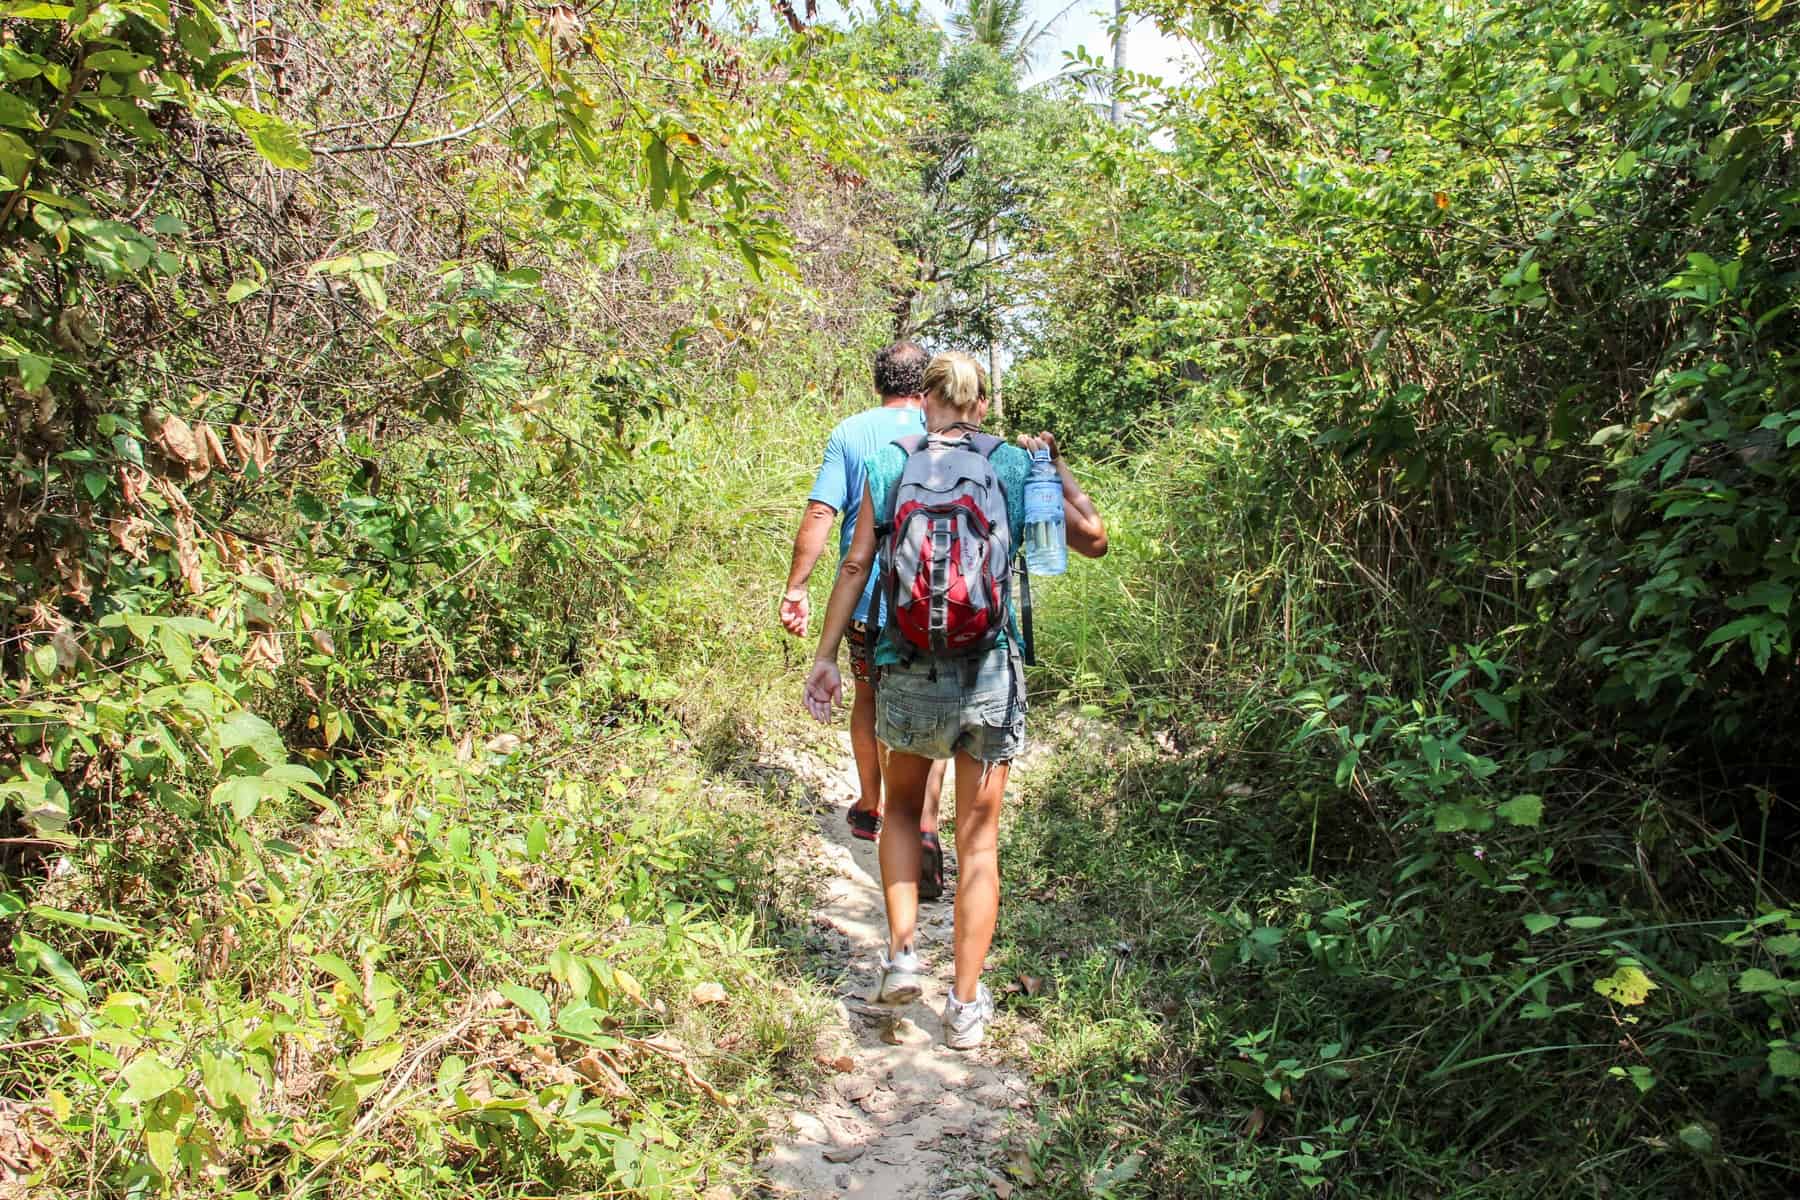 A man leads a woman through a narrow walking trail in dense forest